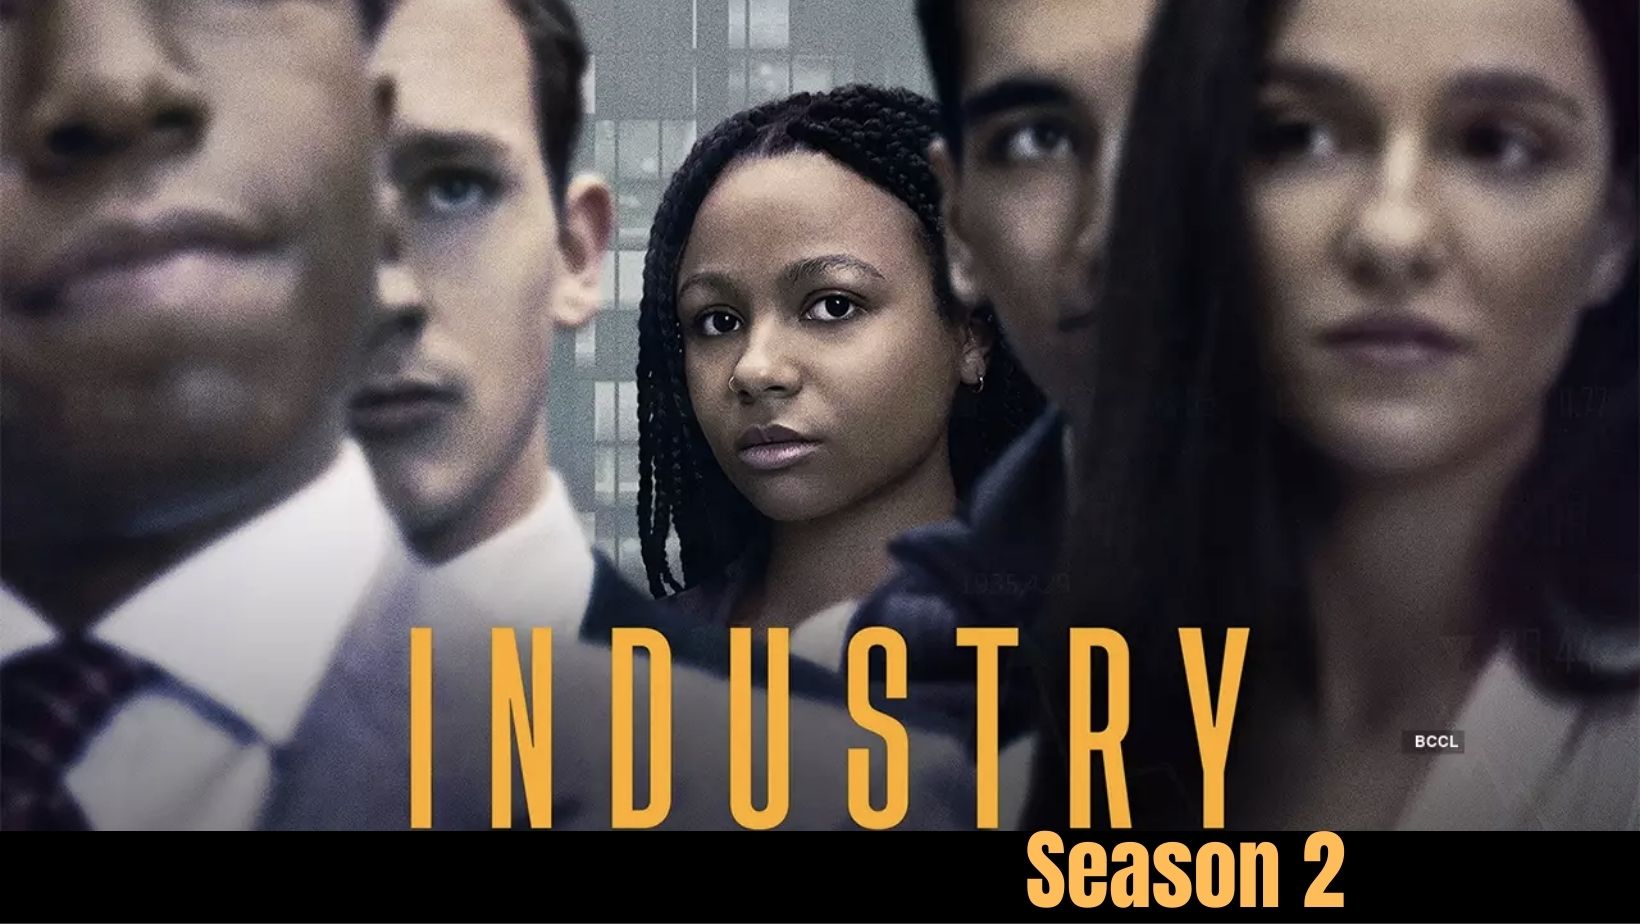 Industry Season 2